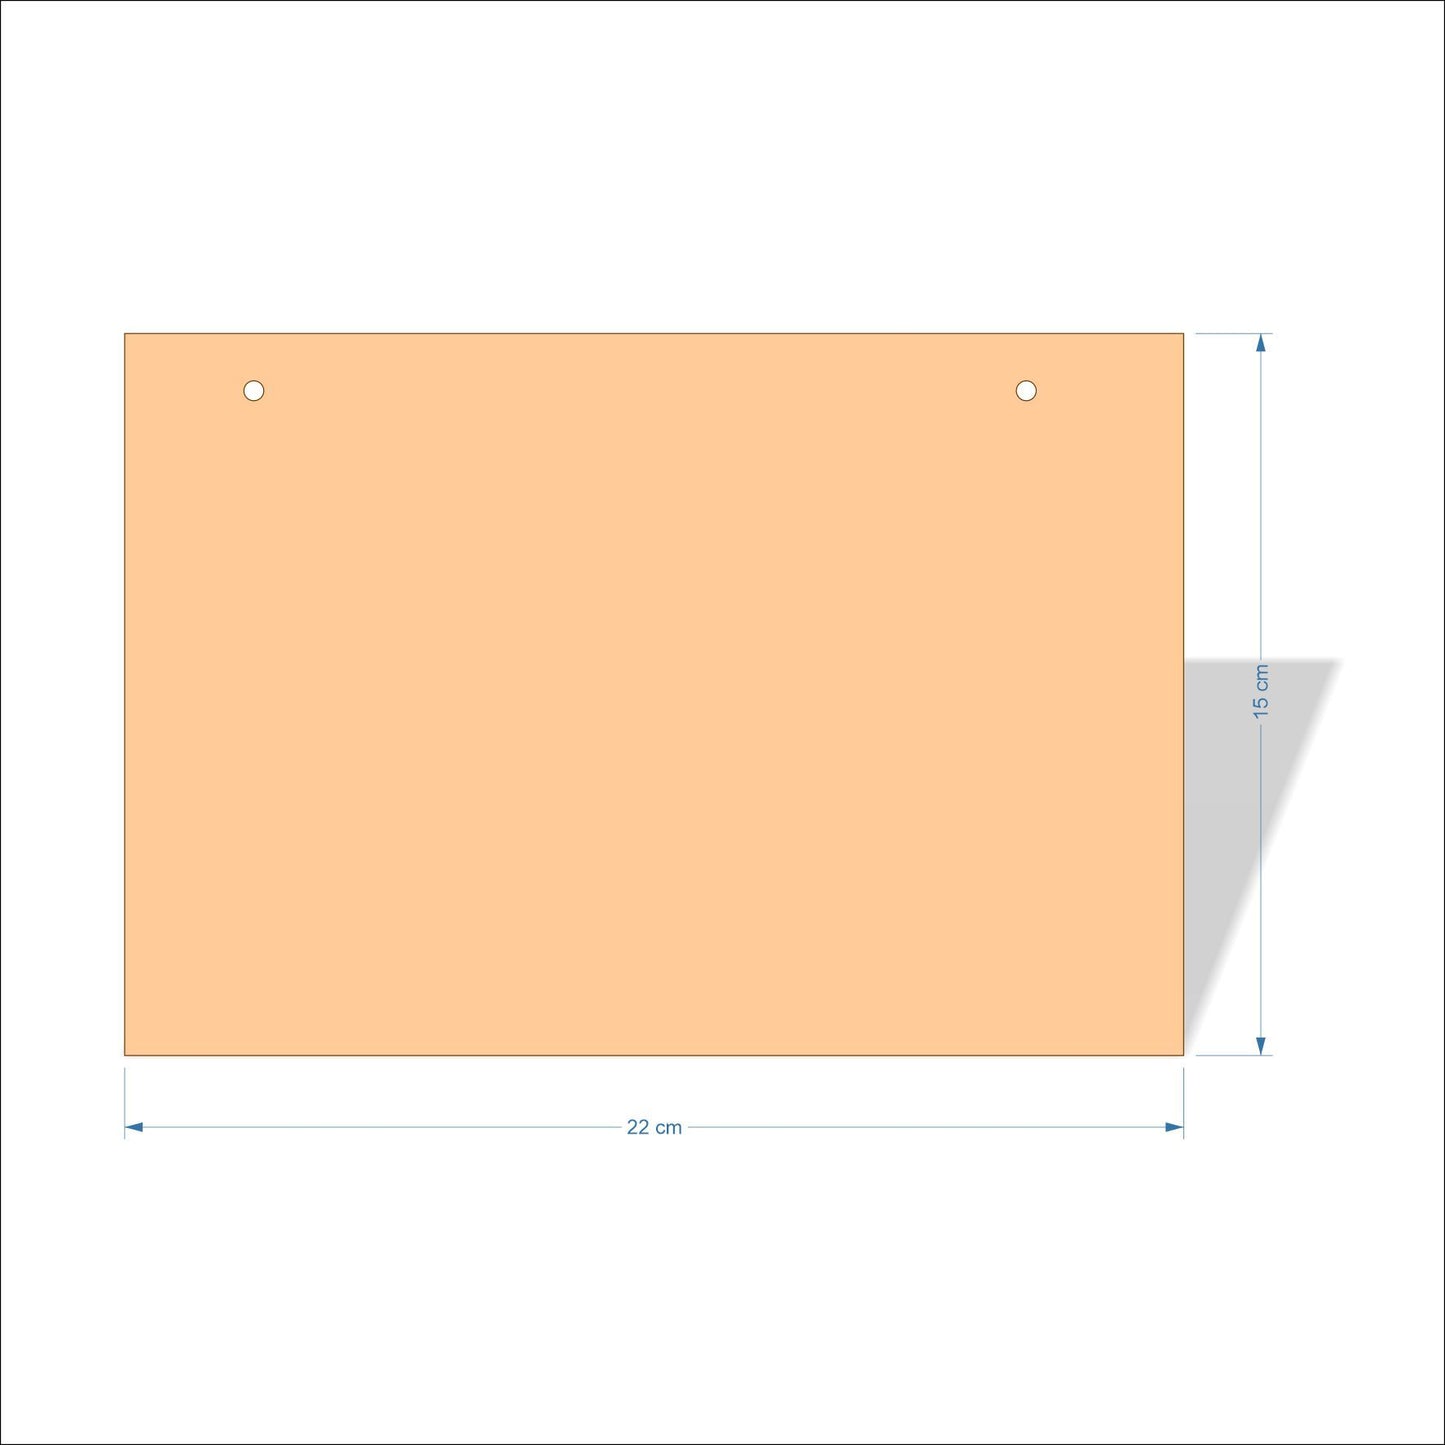 22 cm X 15 cm 3mm MDF Plaques with square corners